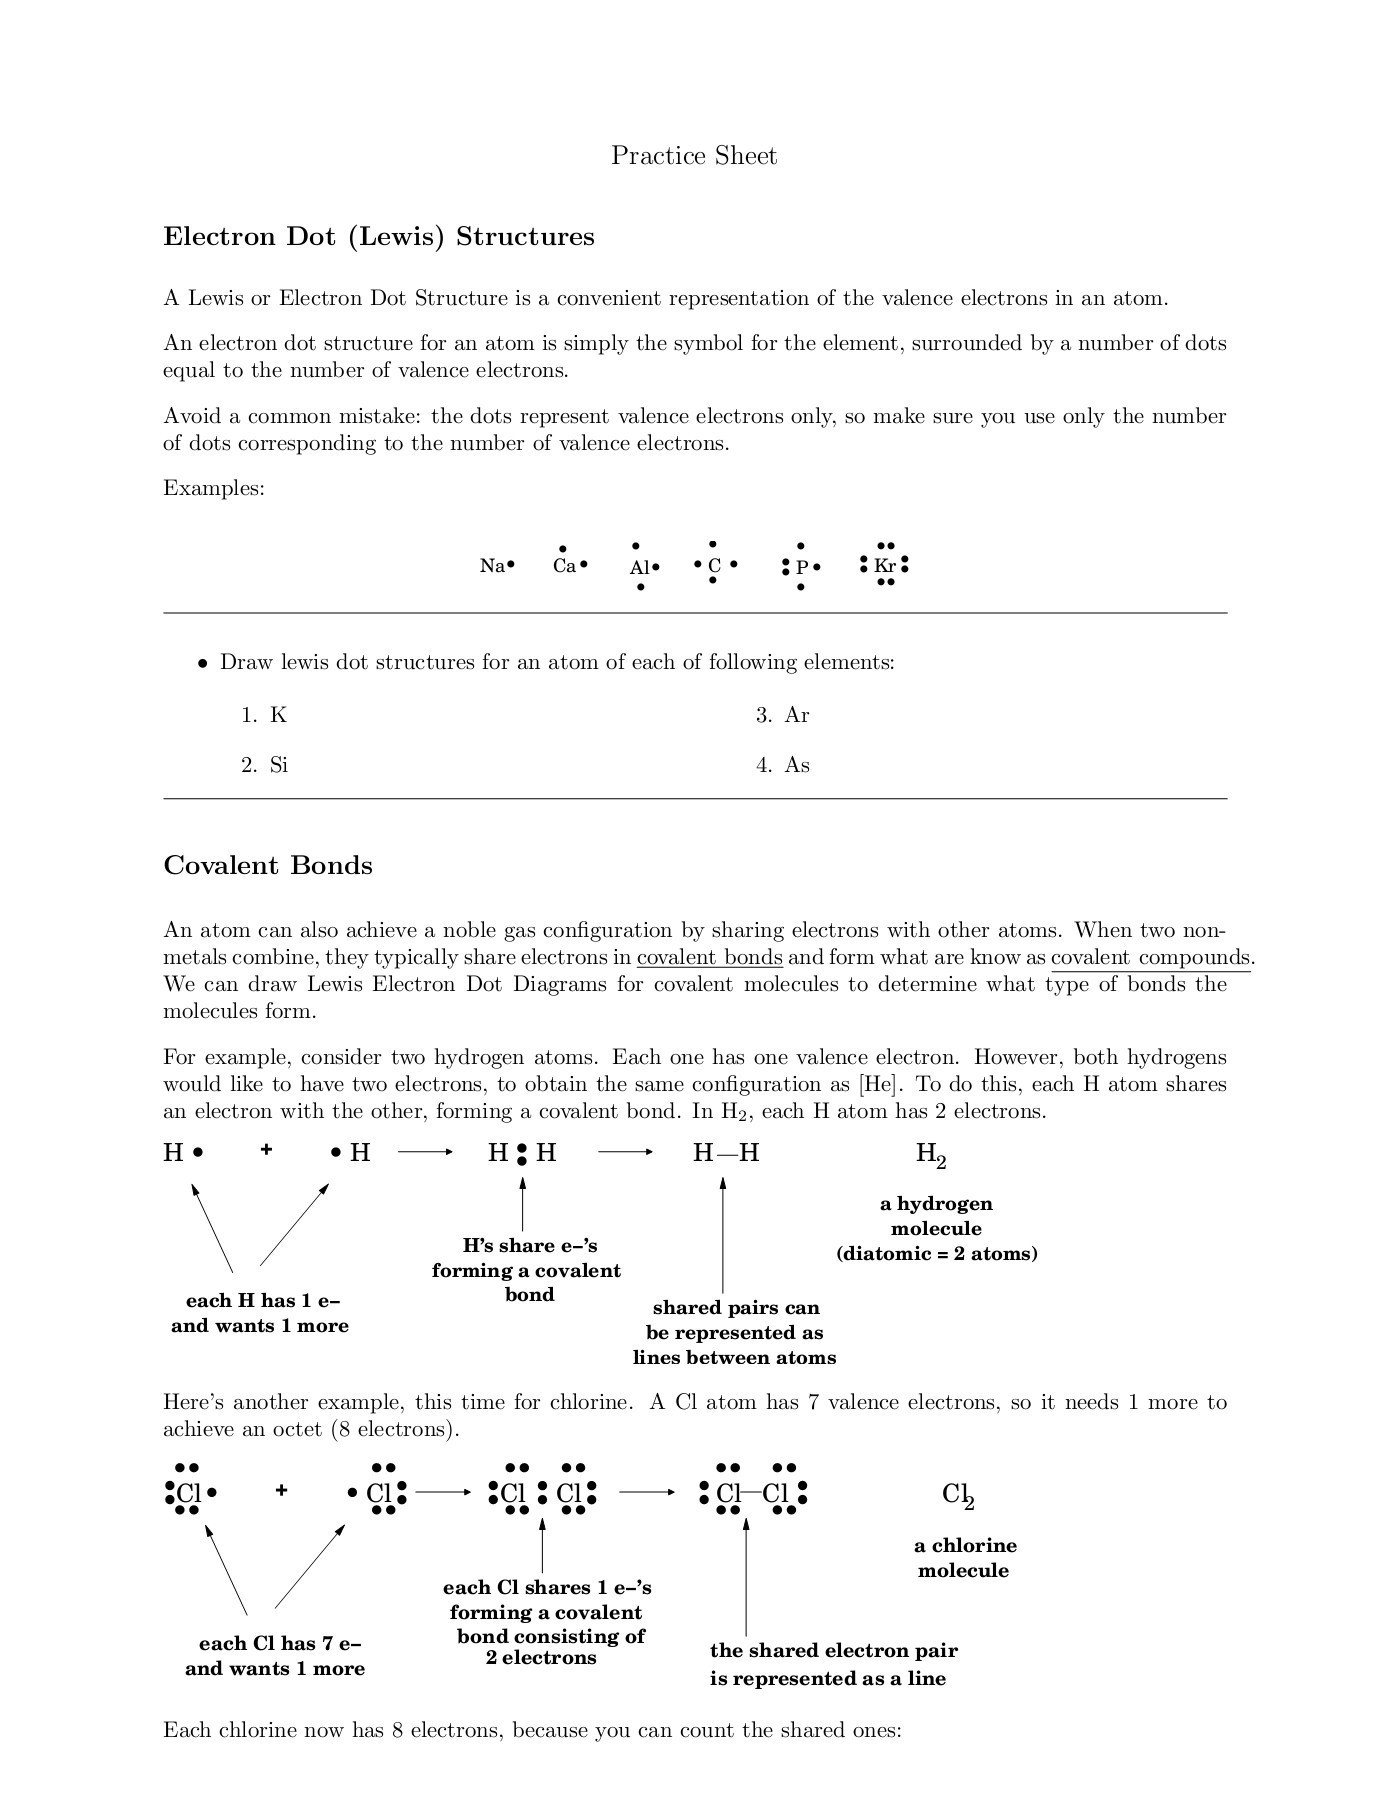 Electron Dot Diagram Worksheet Electron Dot Lewis Structures Pages 1 4 Text Version